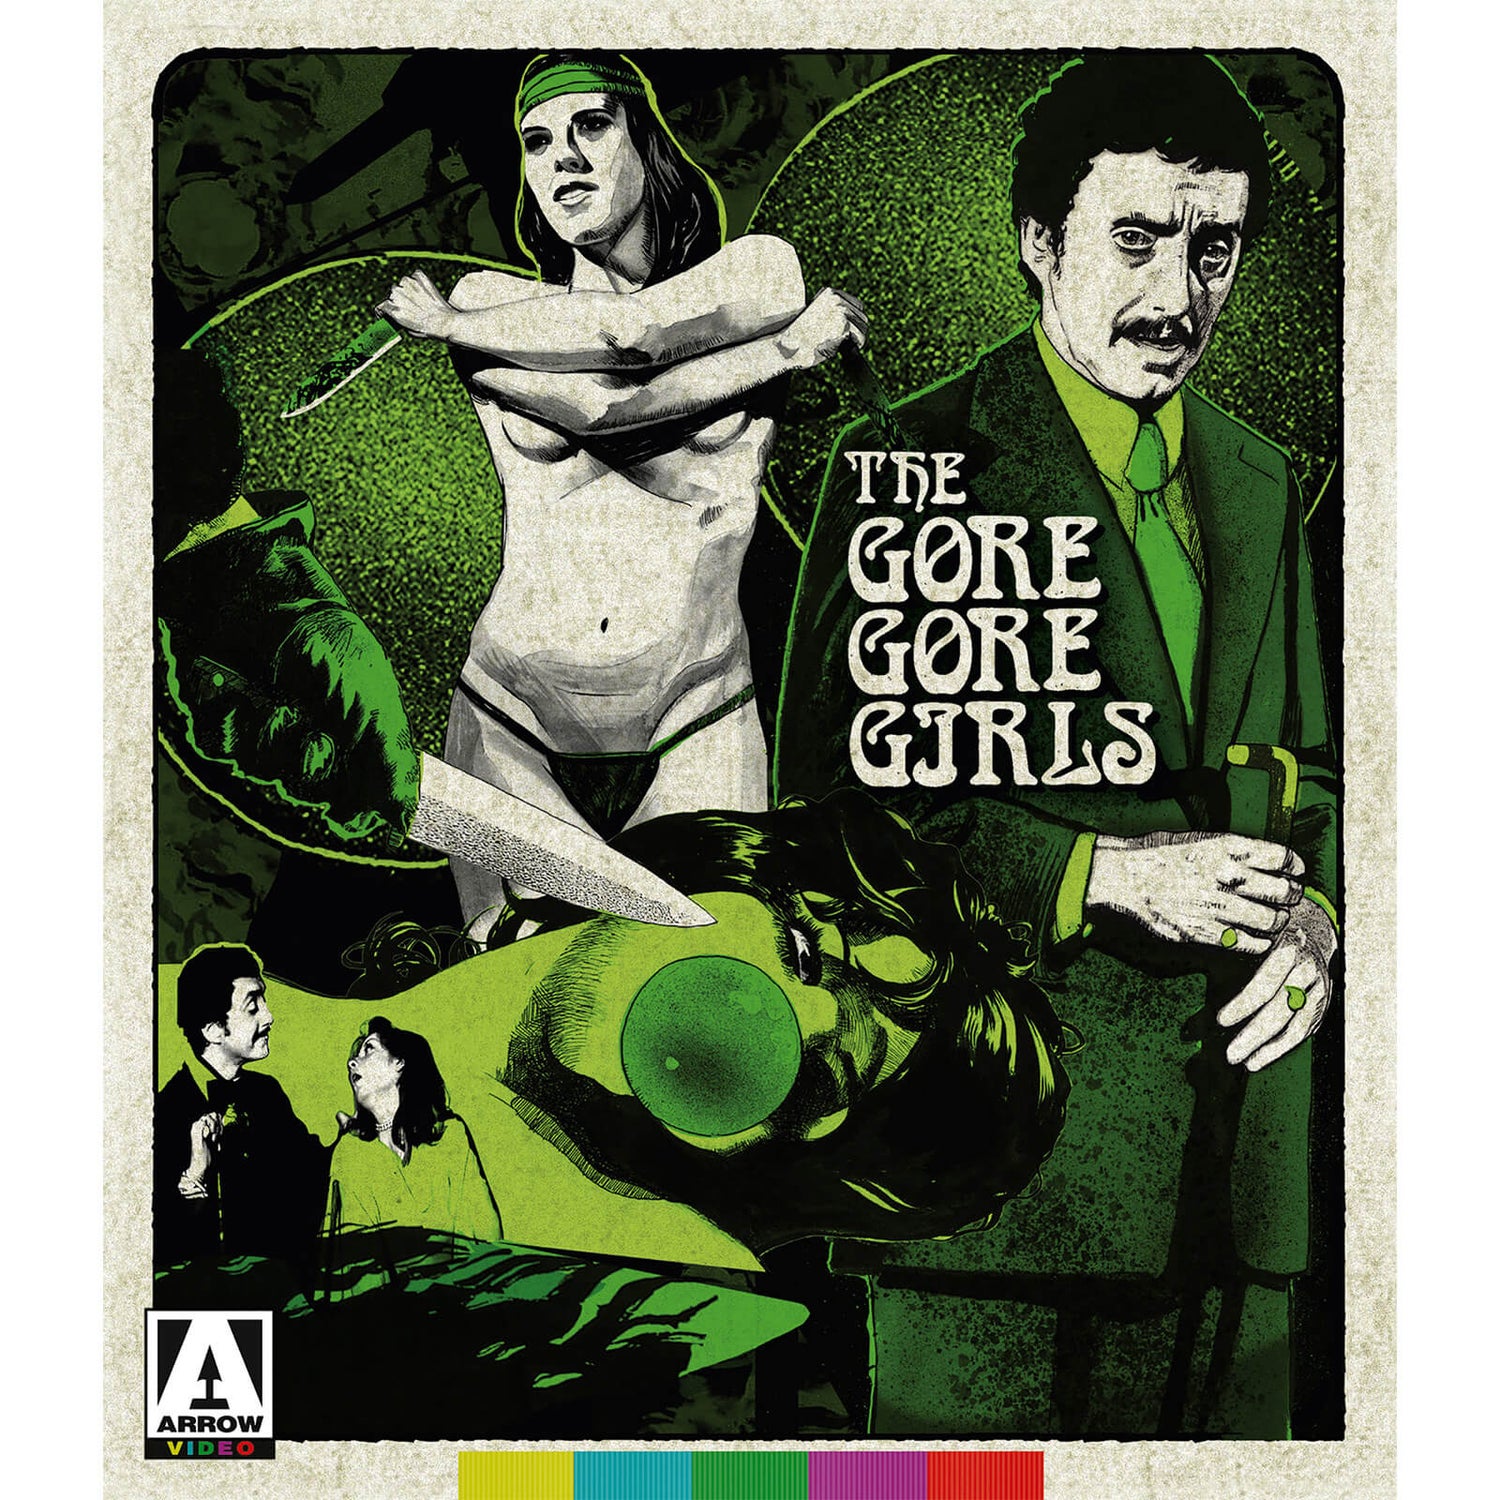 The Gore Gore Girls Blu-ray